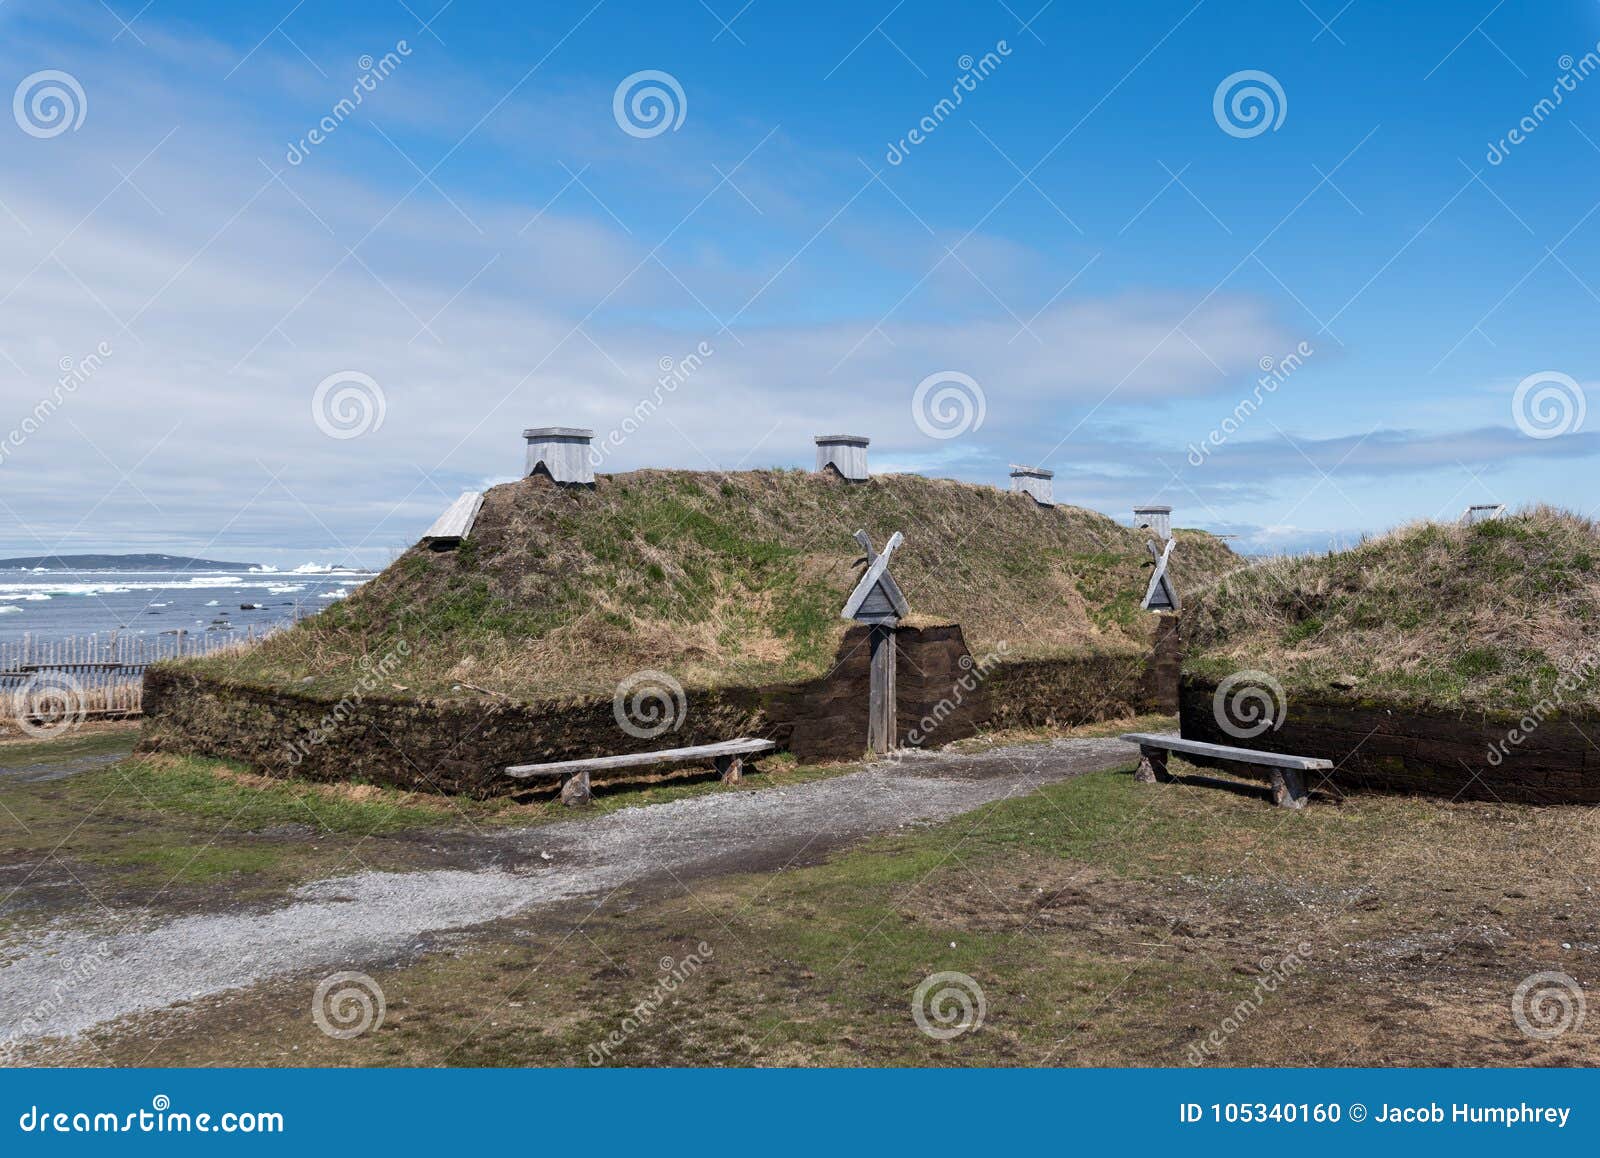 l`anse aux meadows viking village, national historic site, newfoundland